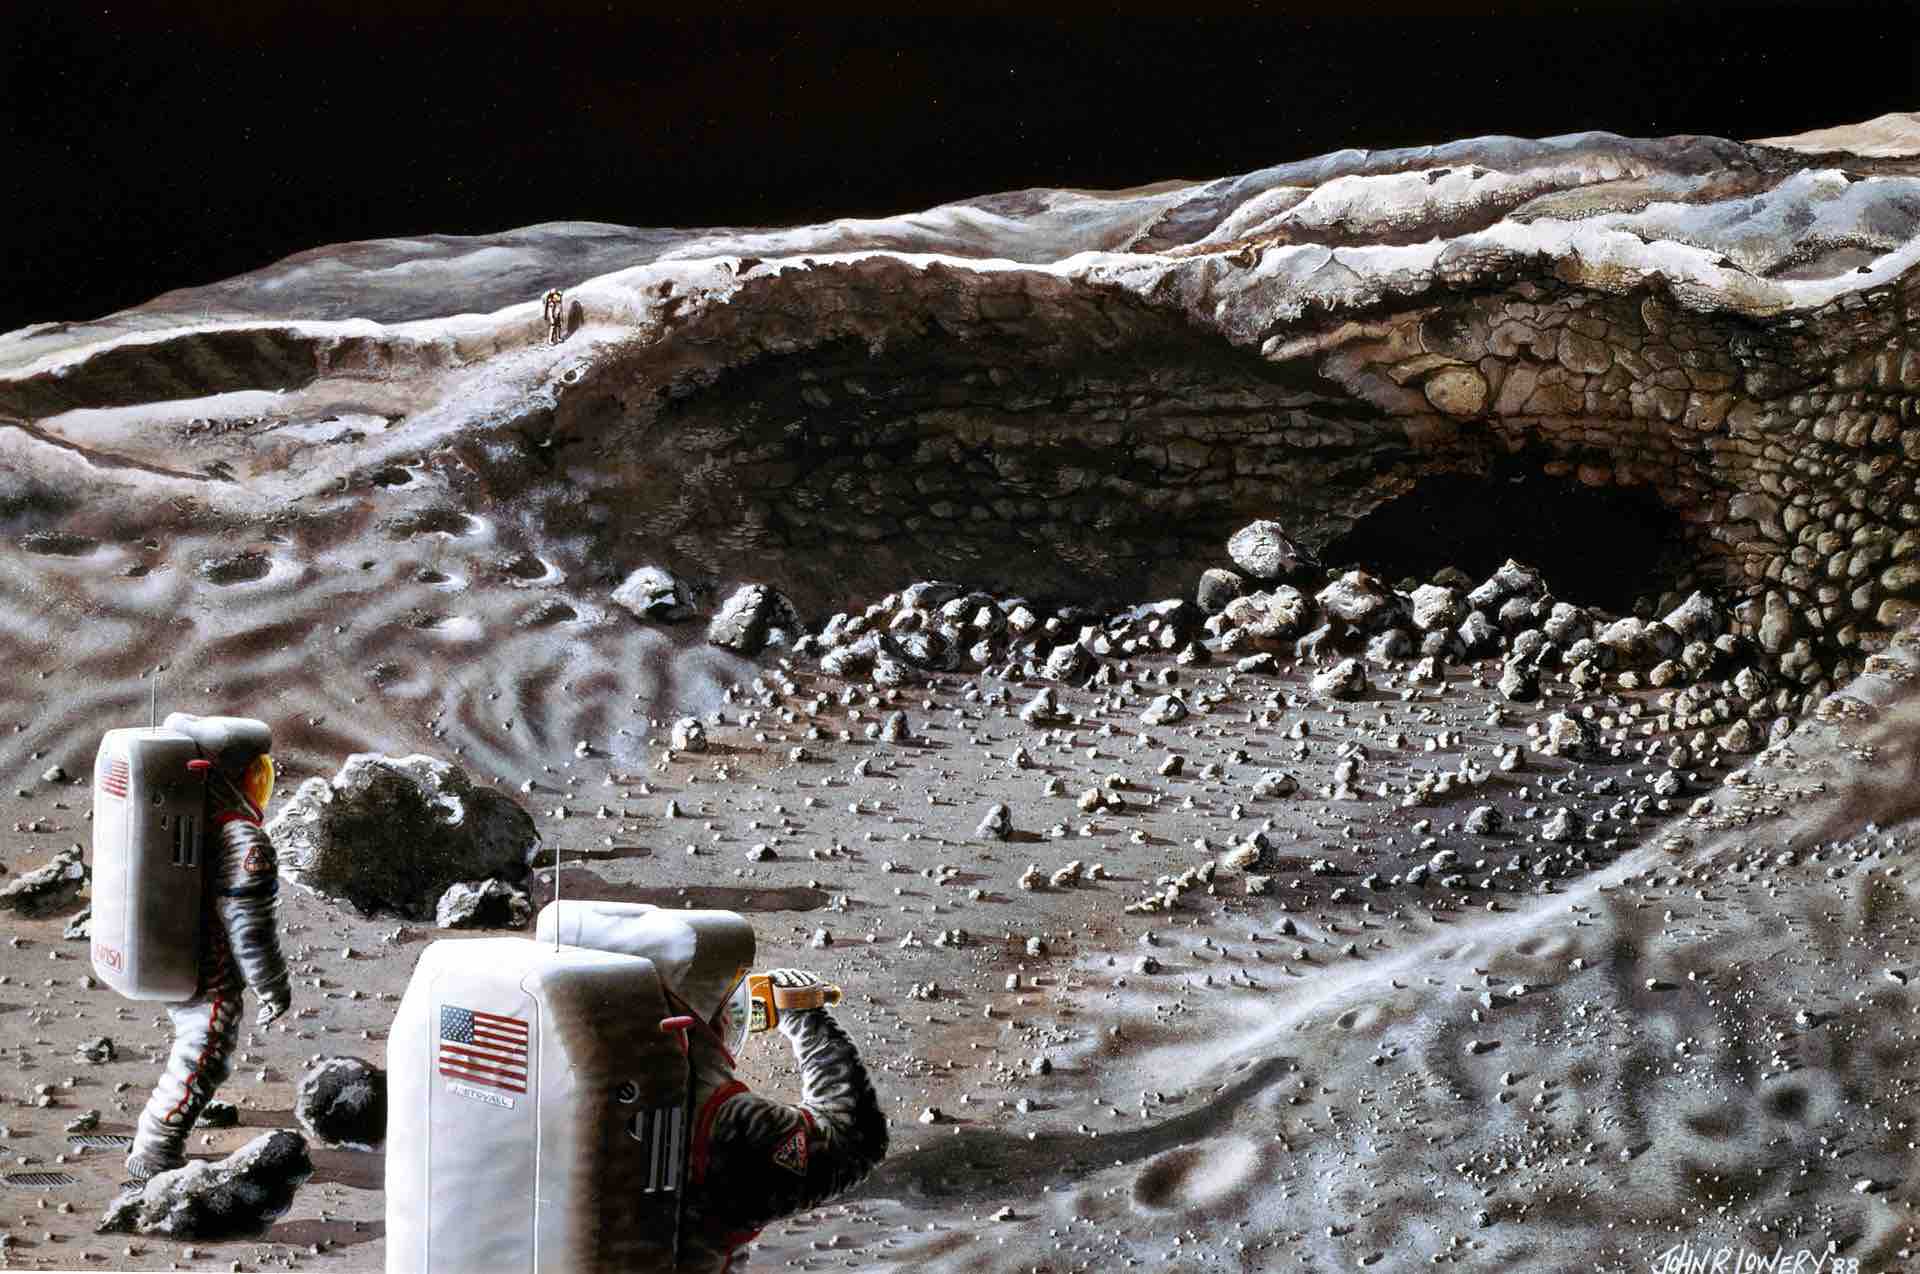 Lunar Exploration